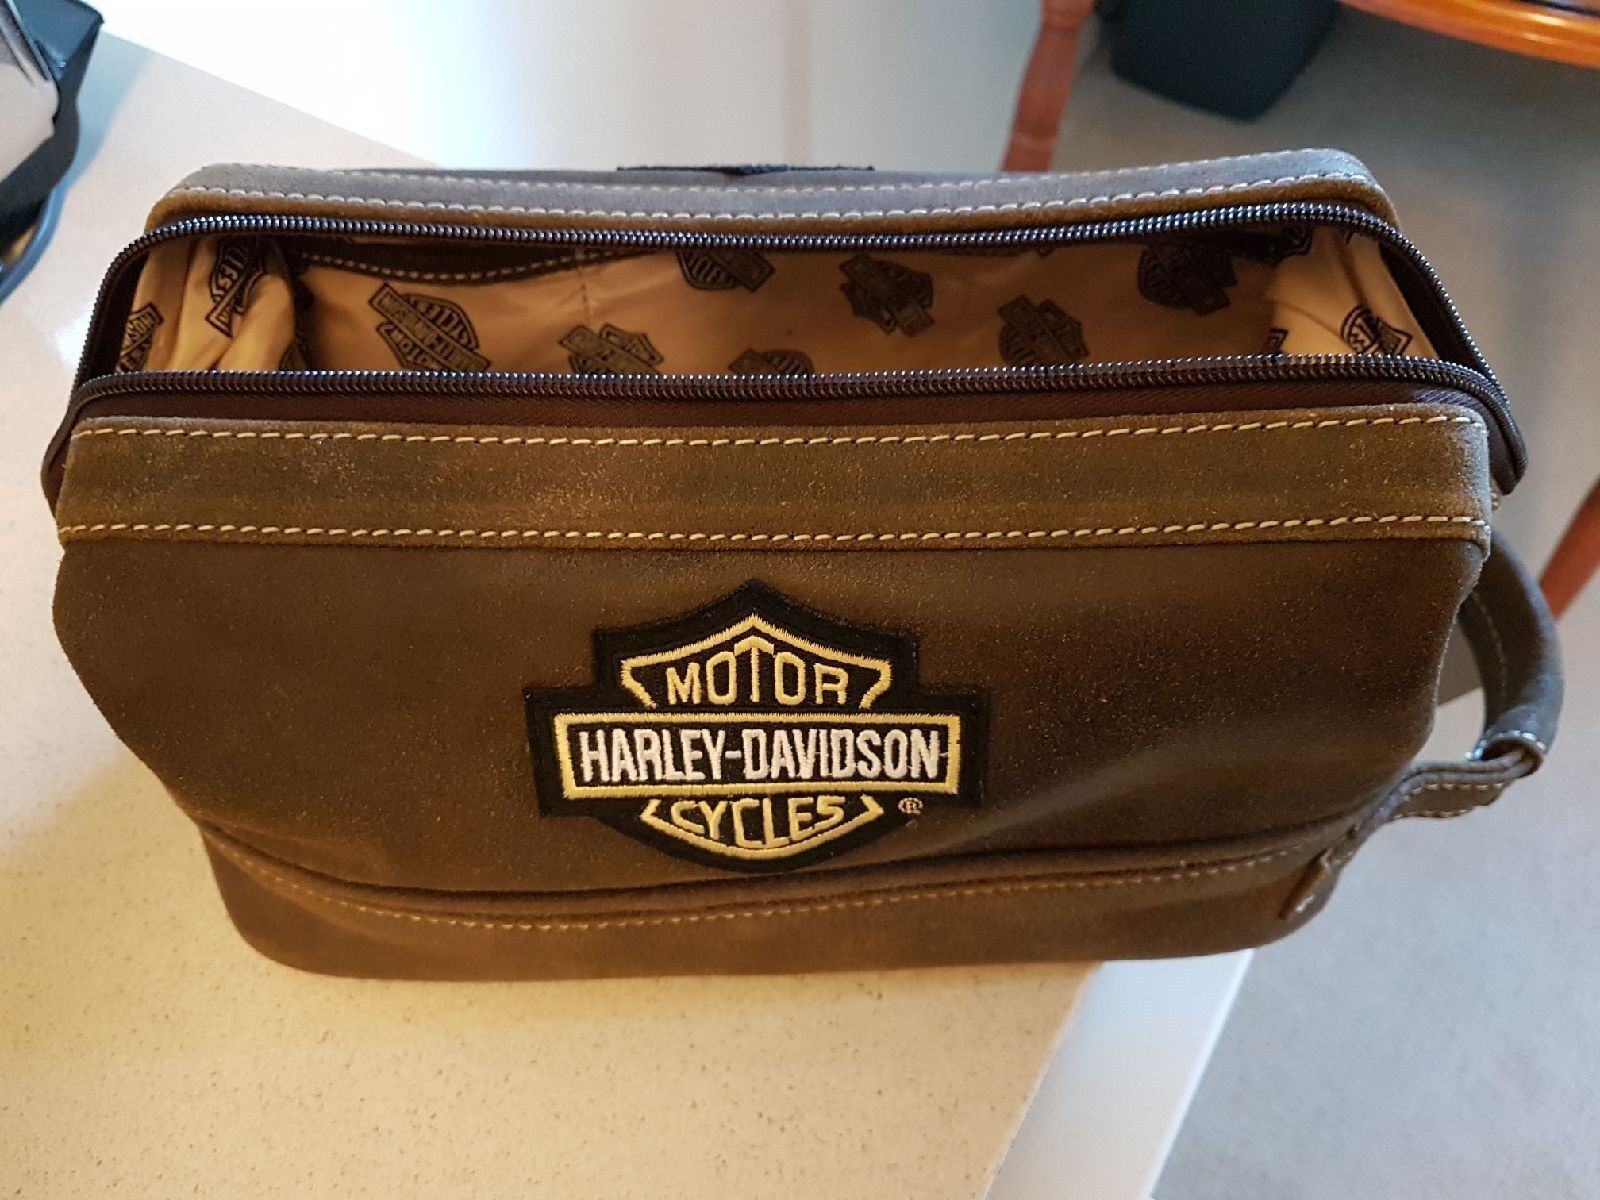 Harley-Davidson Bar & Shield Olive Suede Leather Toiletry Kit